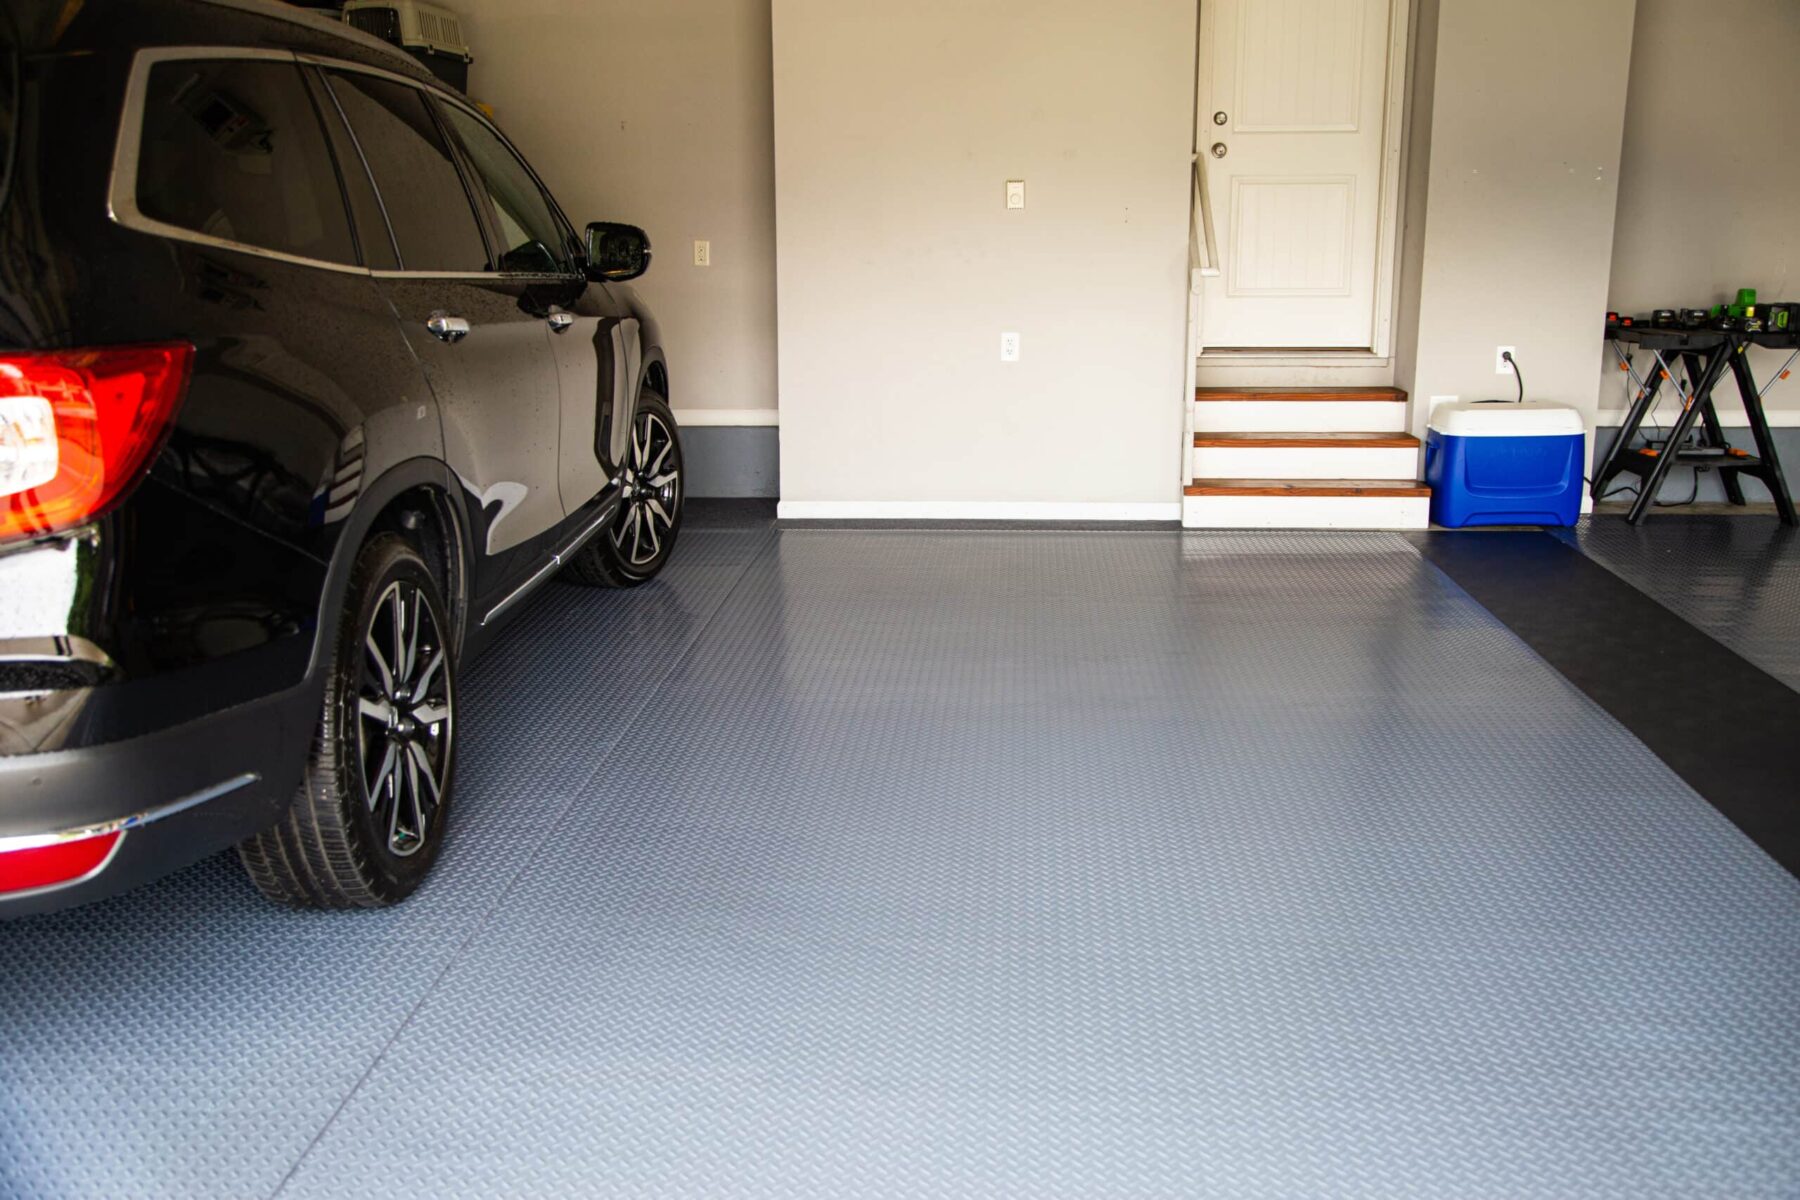 Slate Grey G-Floor vinyl flooring in a garage with a black SUV